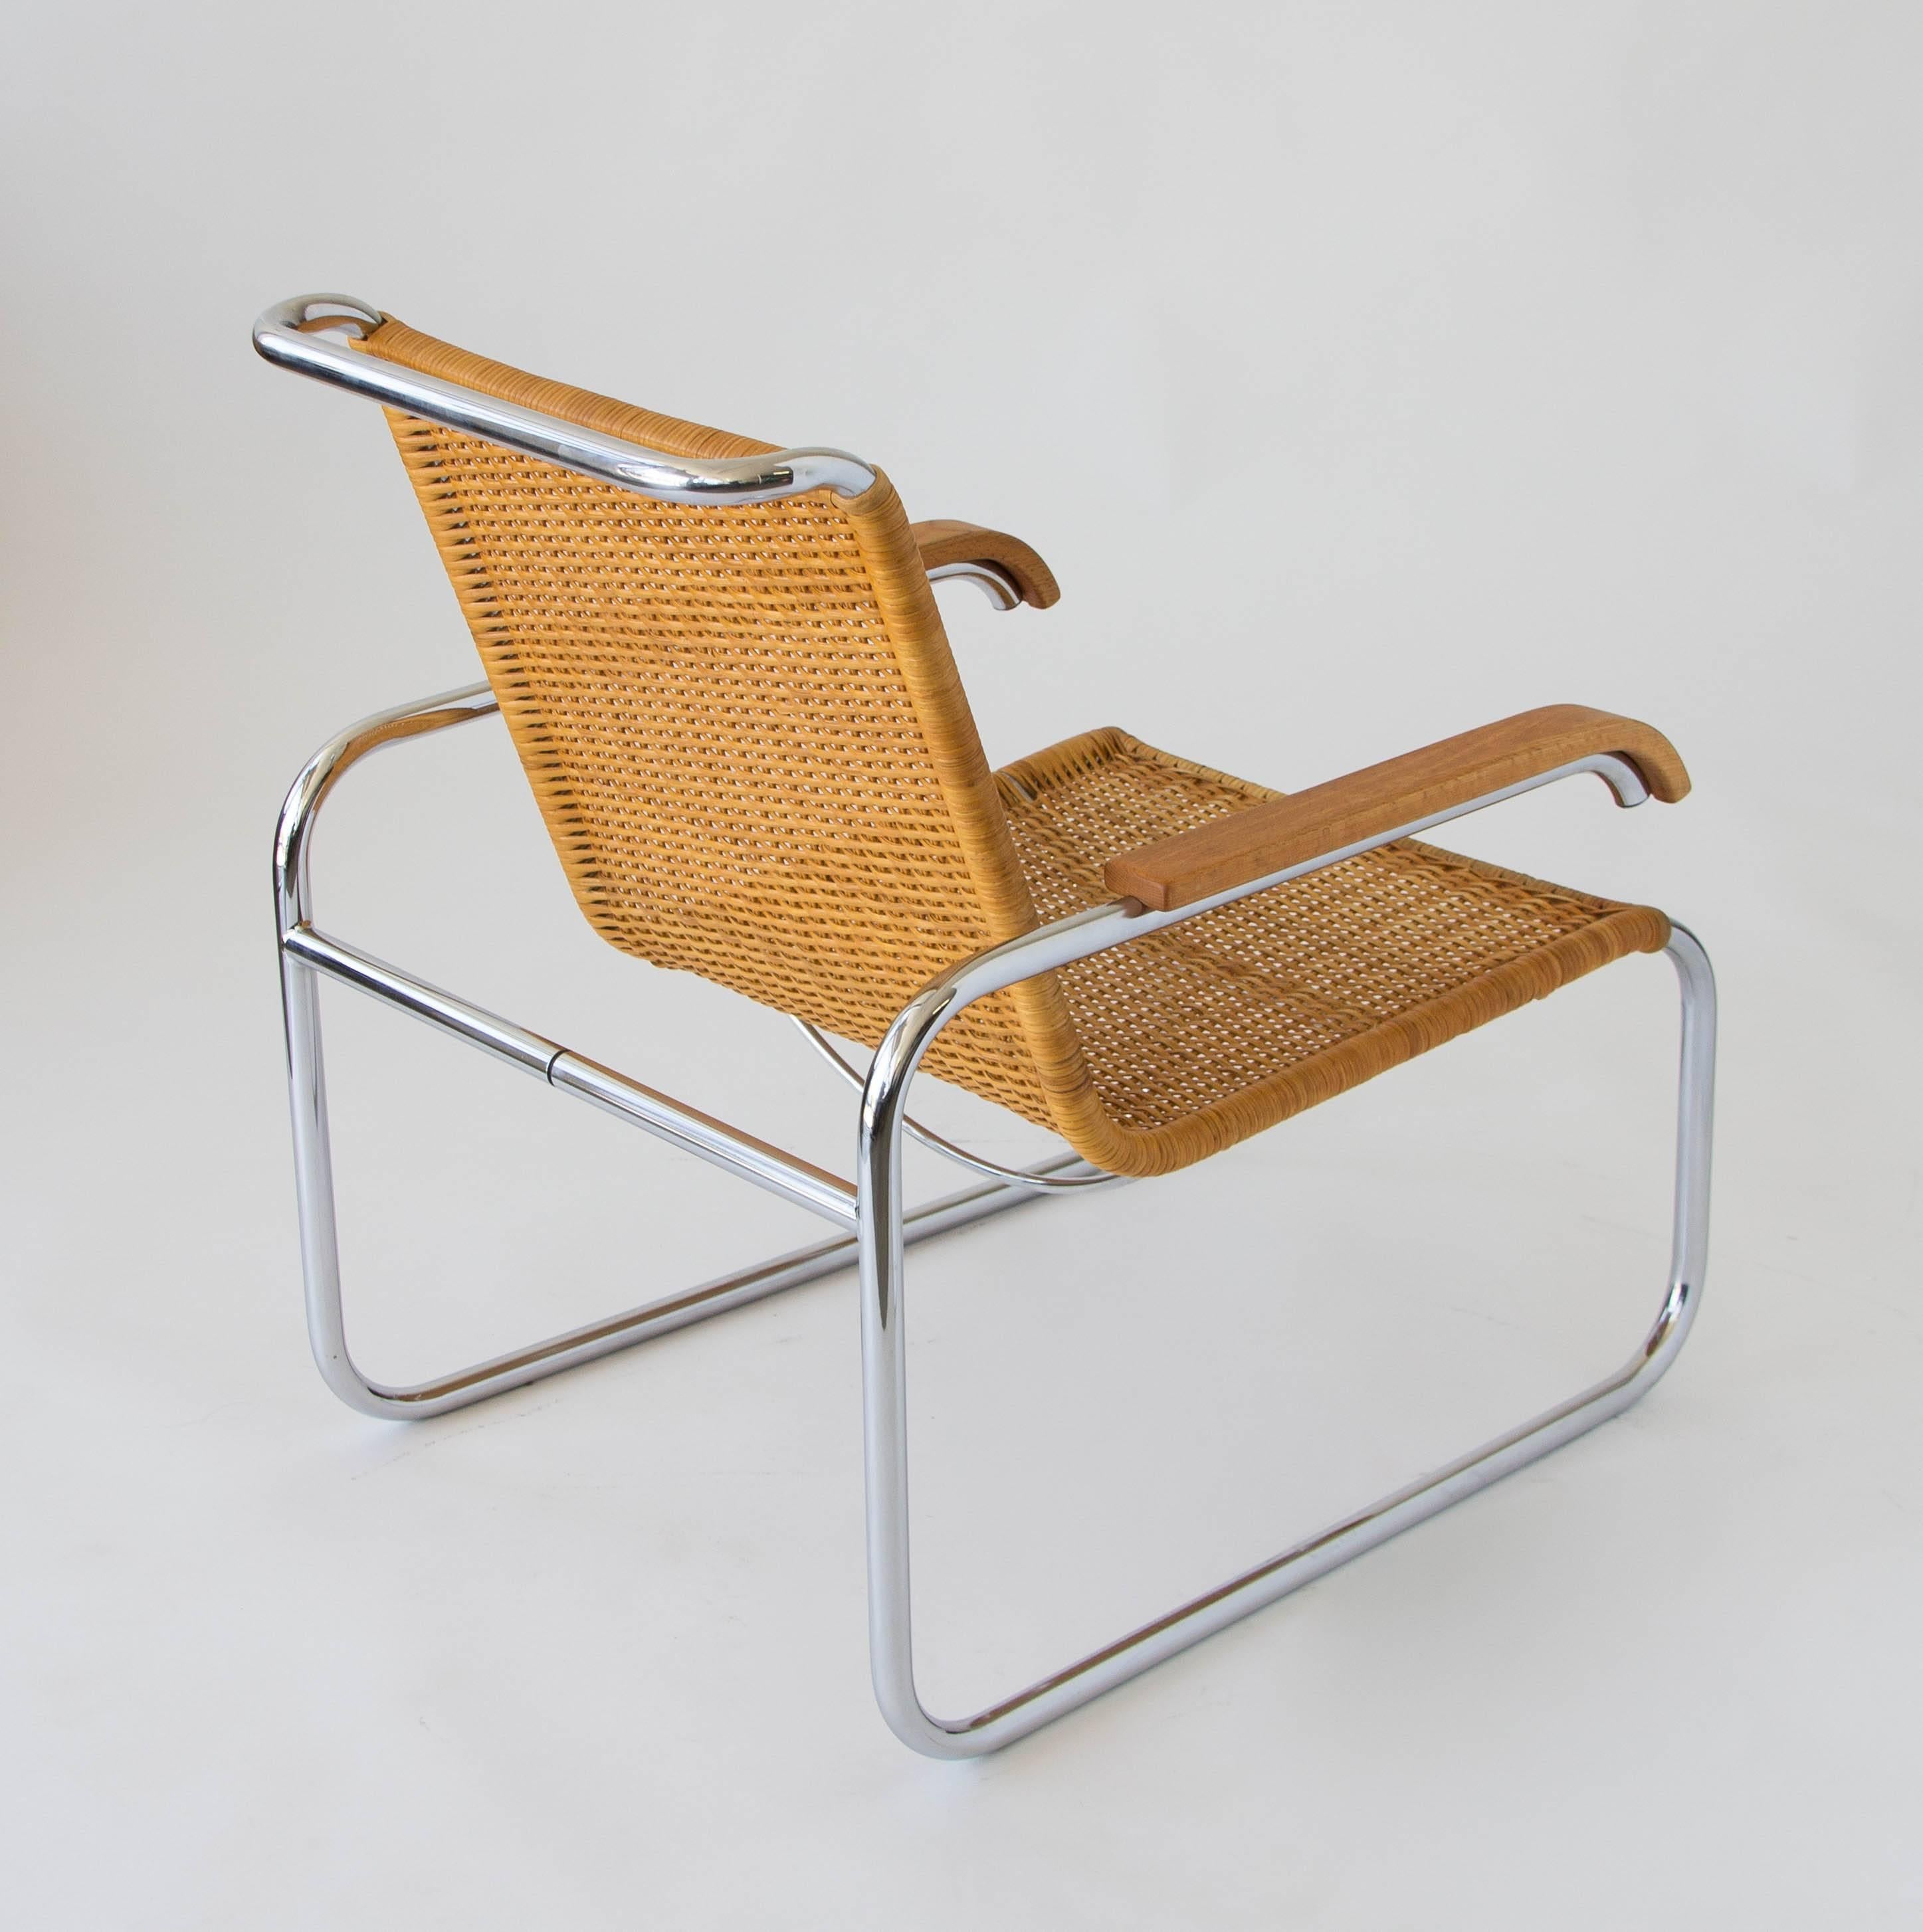 Bauhaus Marcel Breuer for Thonet B35 Rattan Lounge Chair